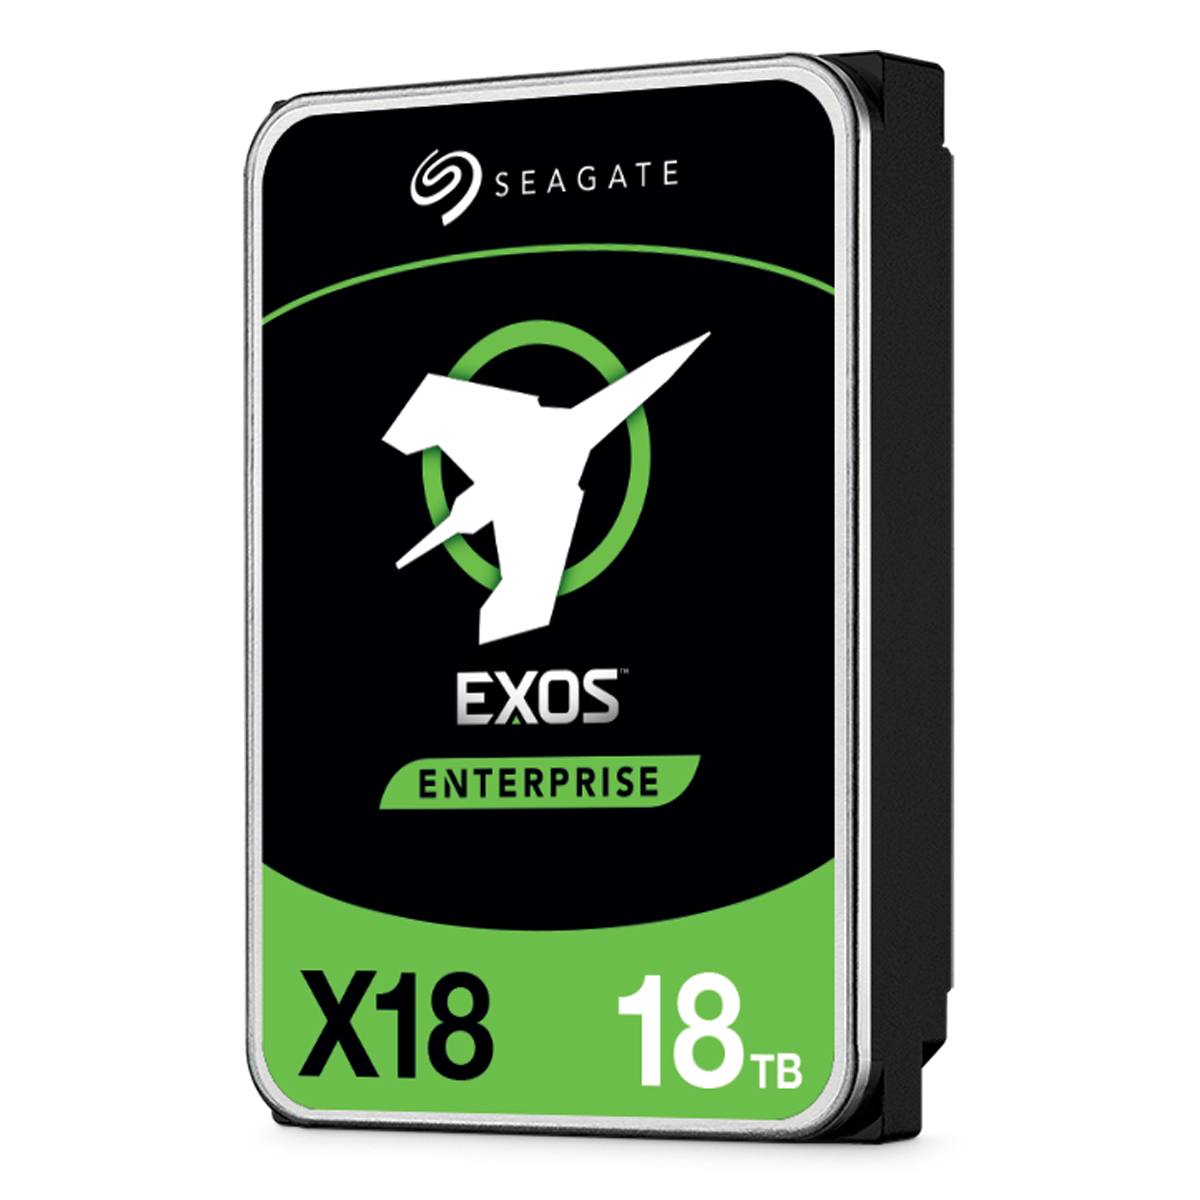 Seagate Exos X18 18TB 3.5 Zoll SAS 12Gb/s CMR Interne Enterprise Festplatte mit FastFormat (512e/4Kn) von Seagate